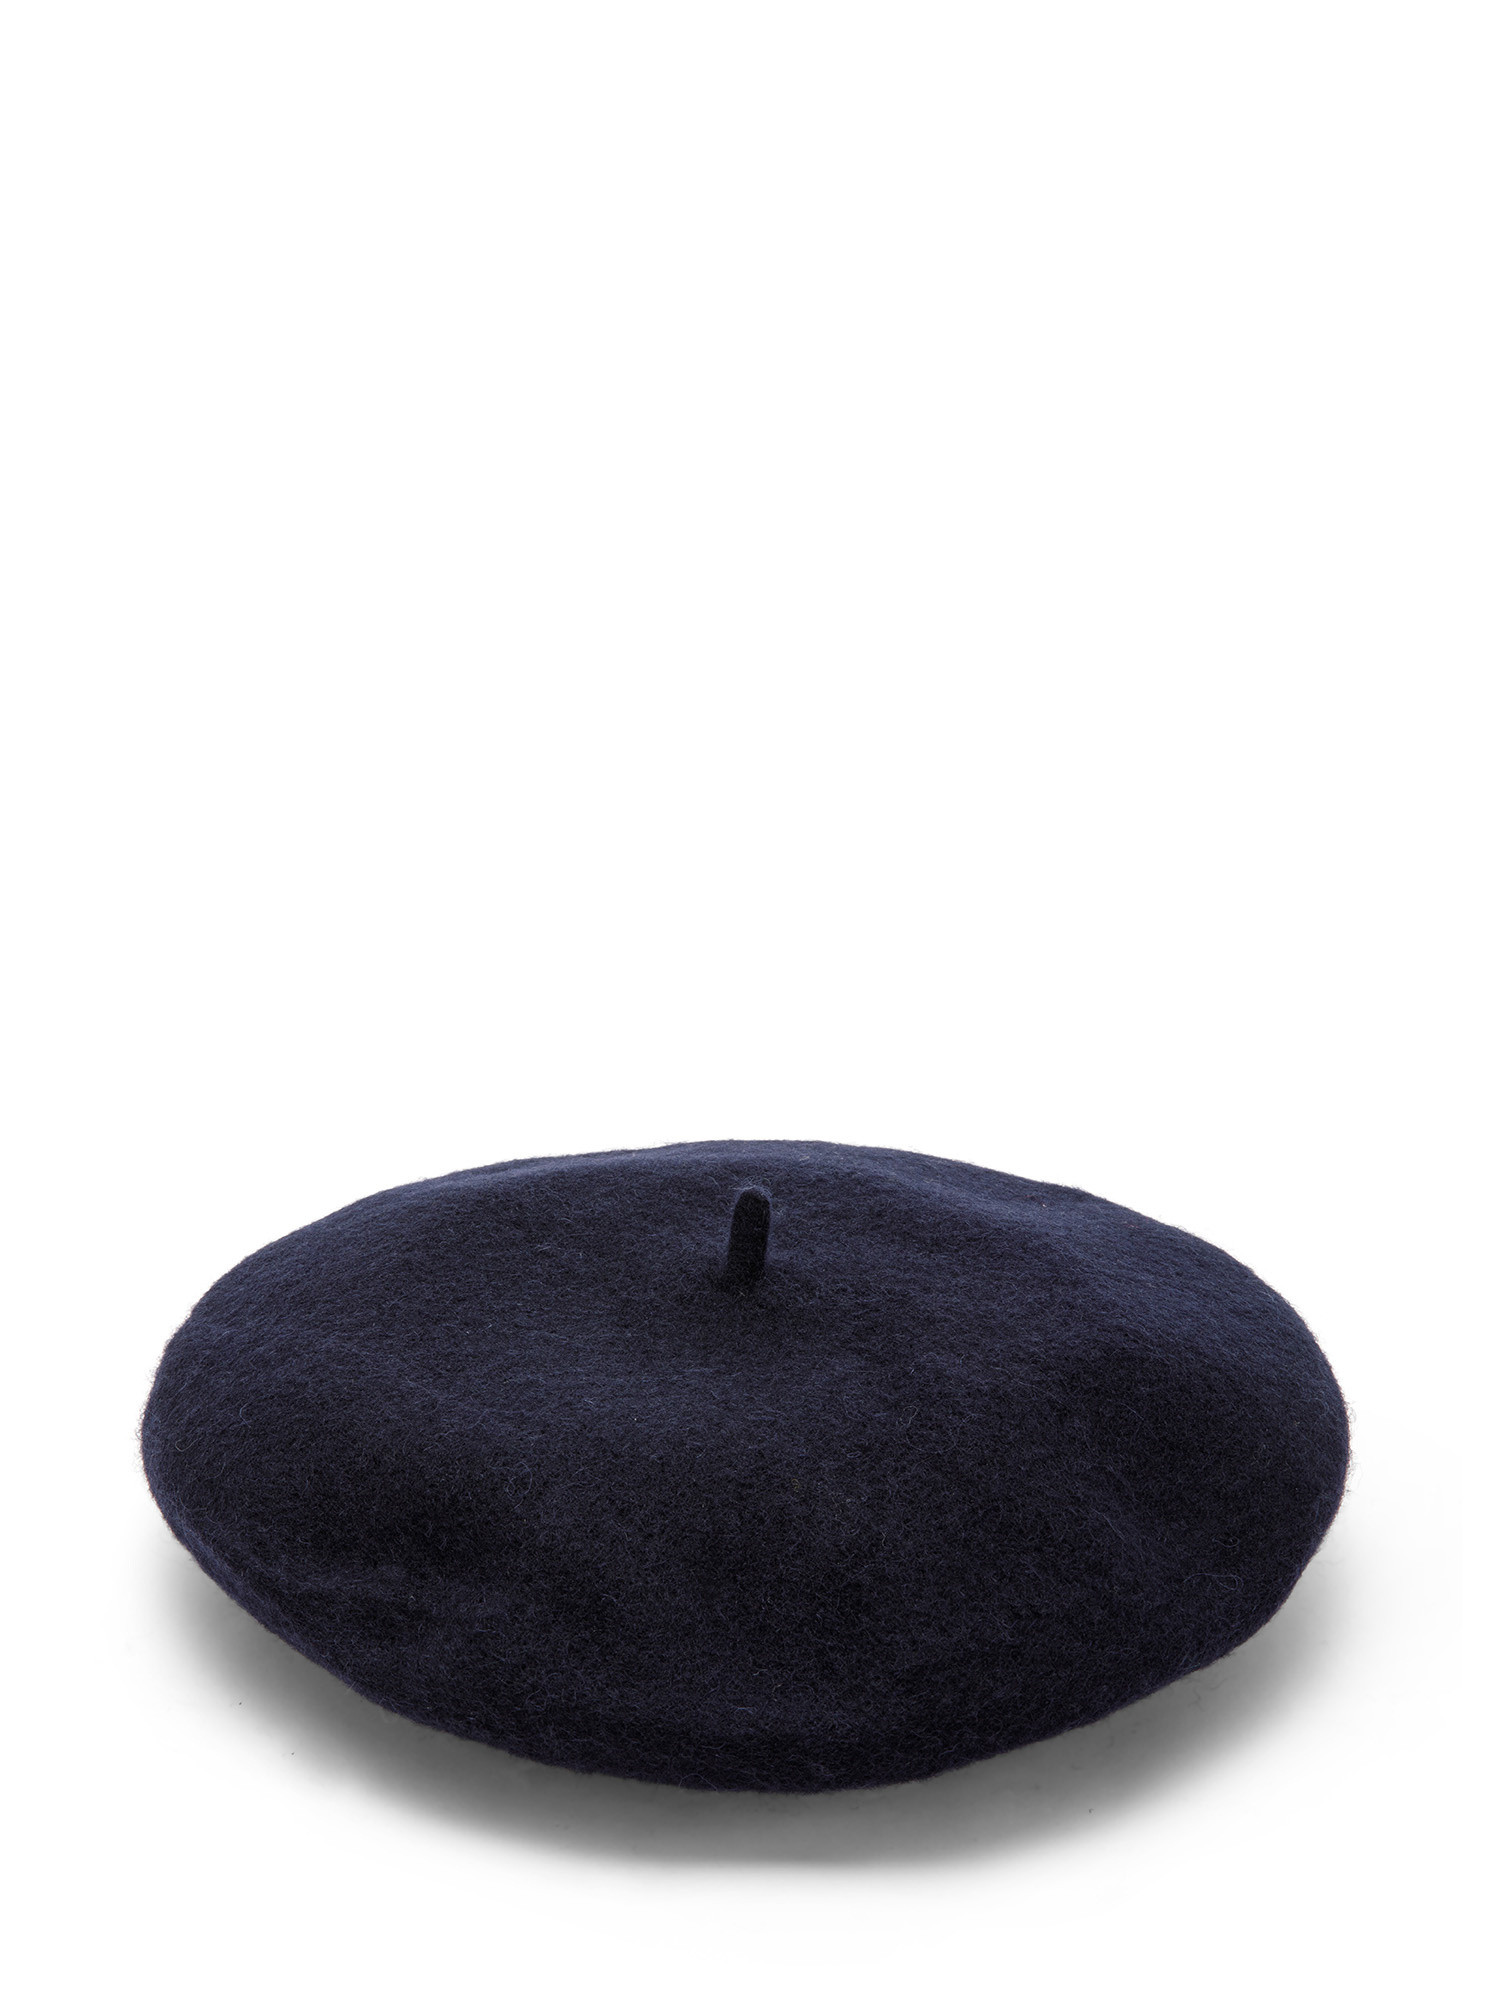 Koan - Pure wool beret, Dark Blue, large image number 0